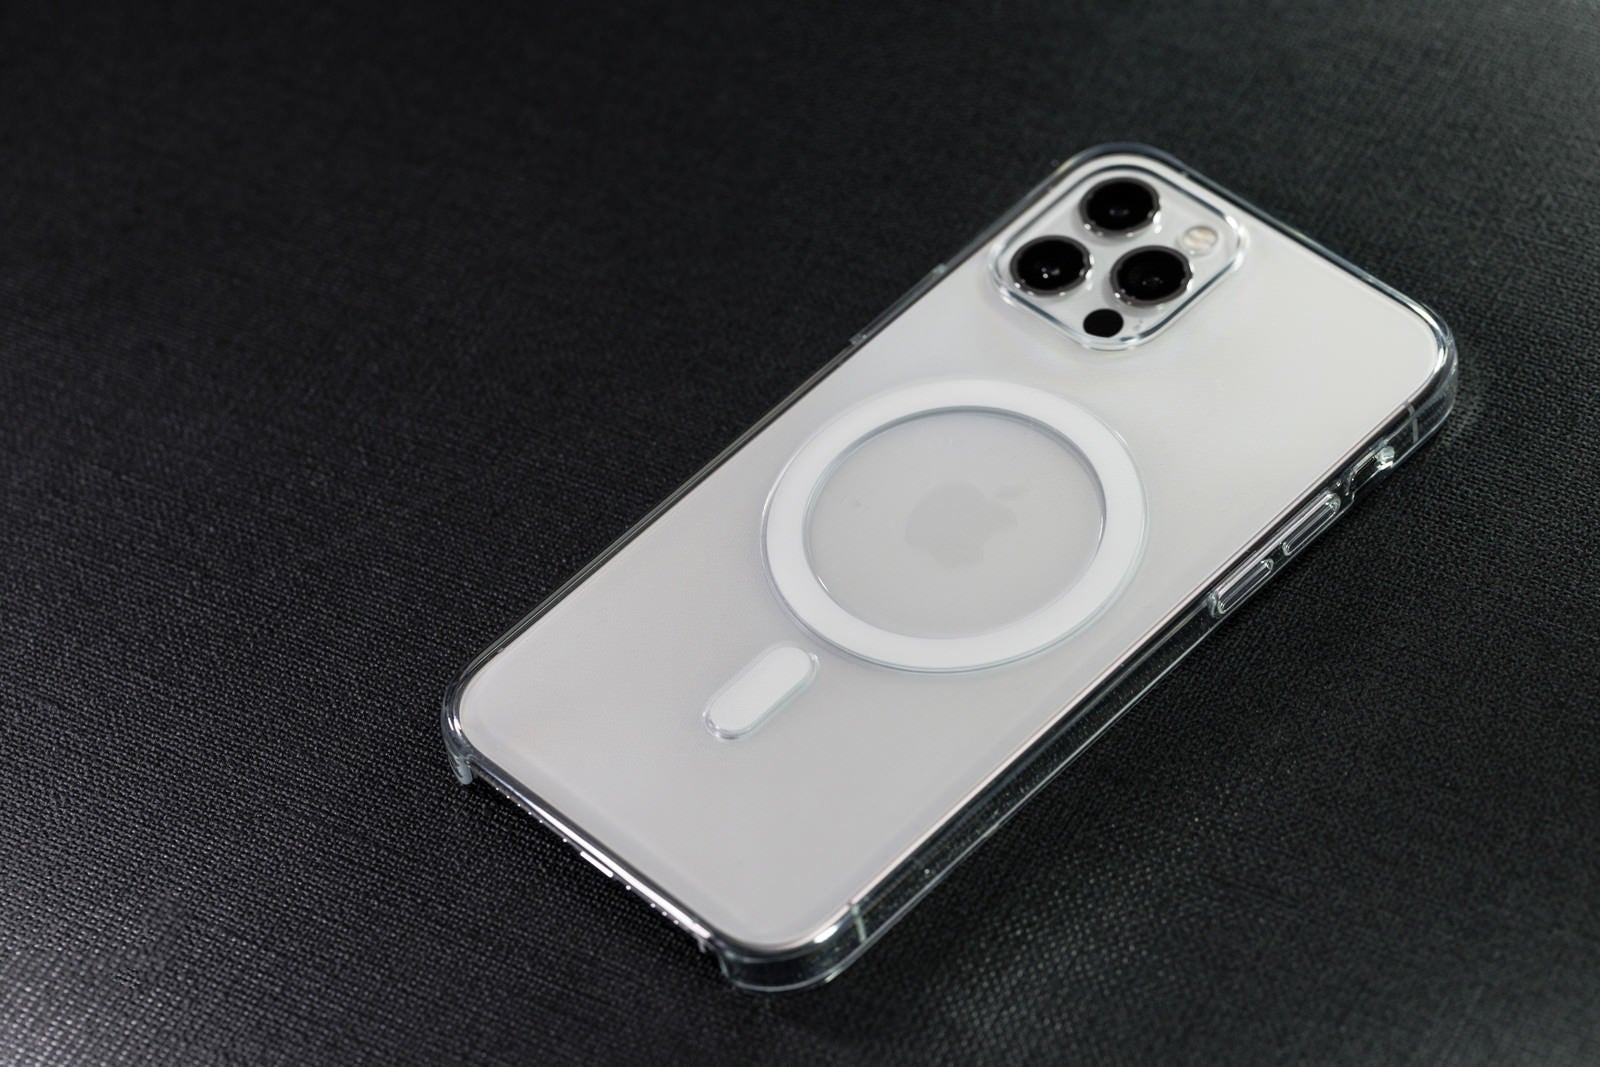 「MagSafe 対応 iPhone12 Pro クリアケース装着済み」の写真